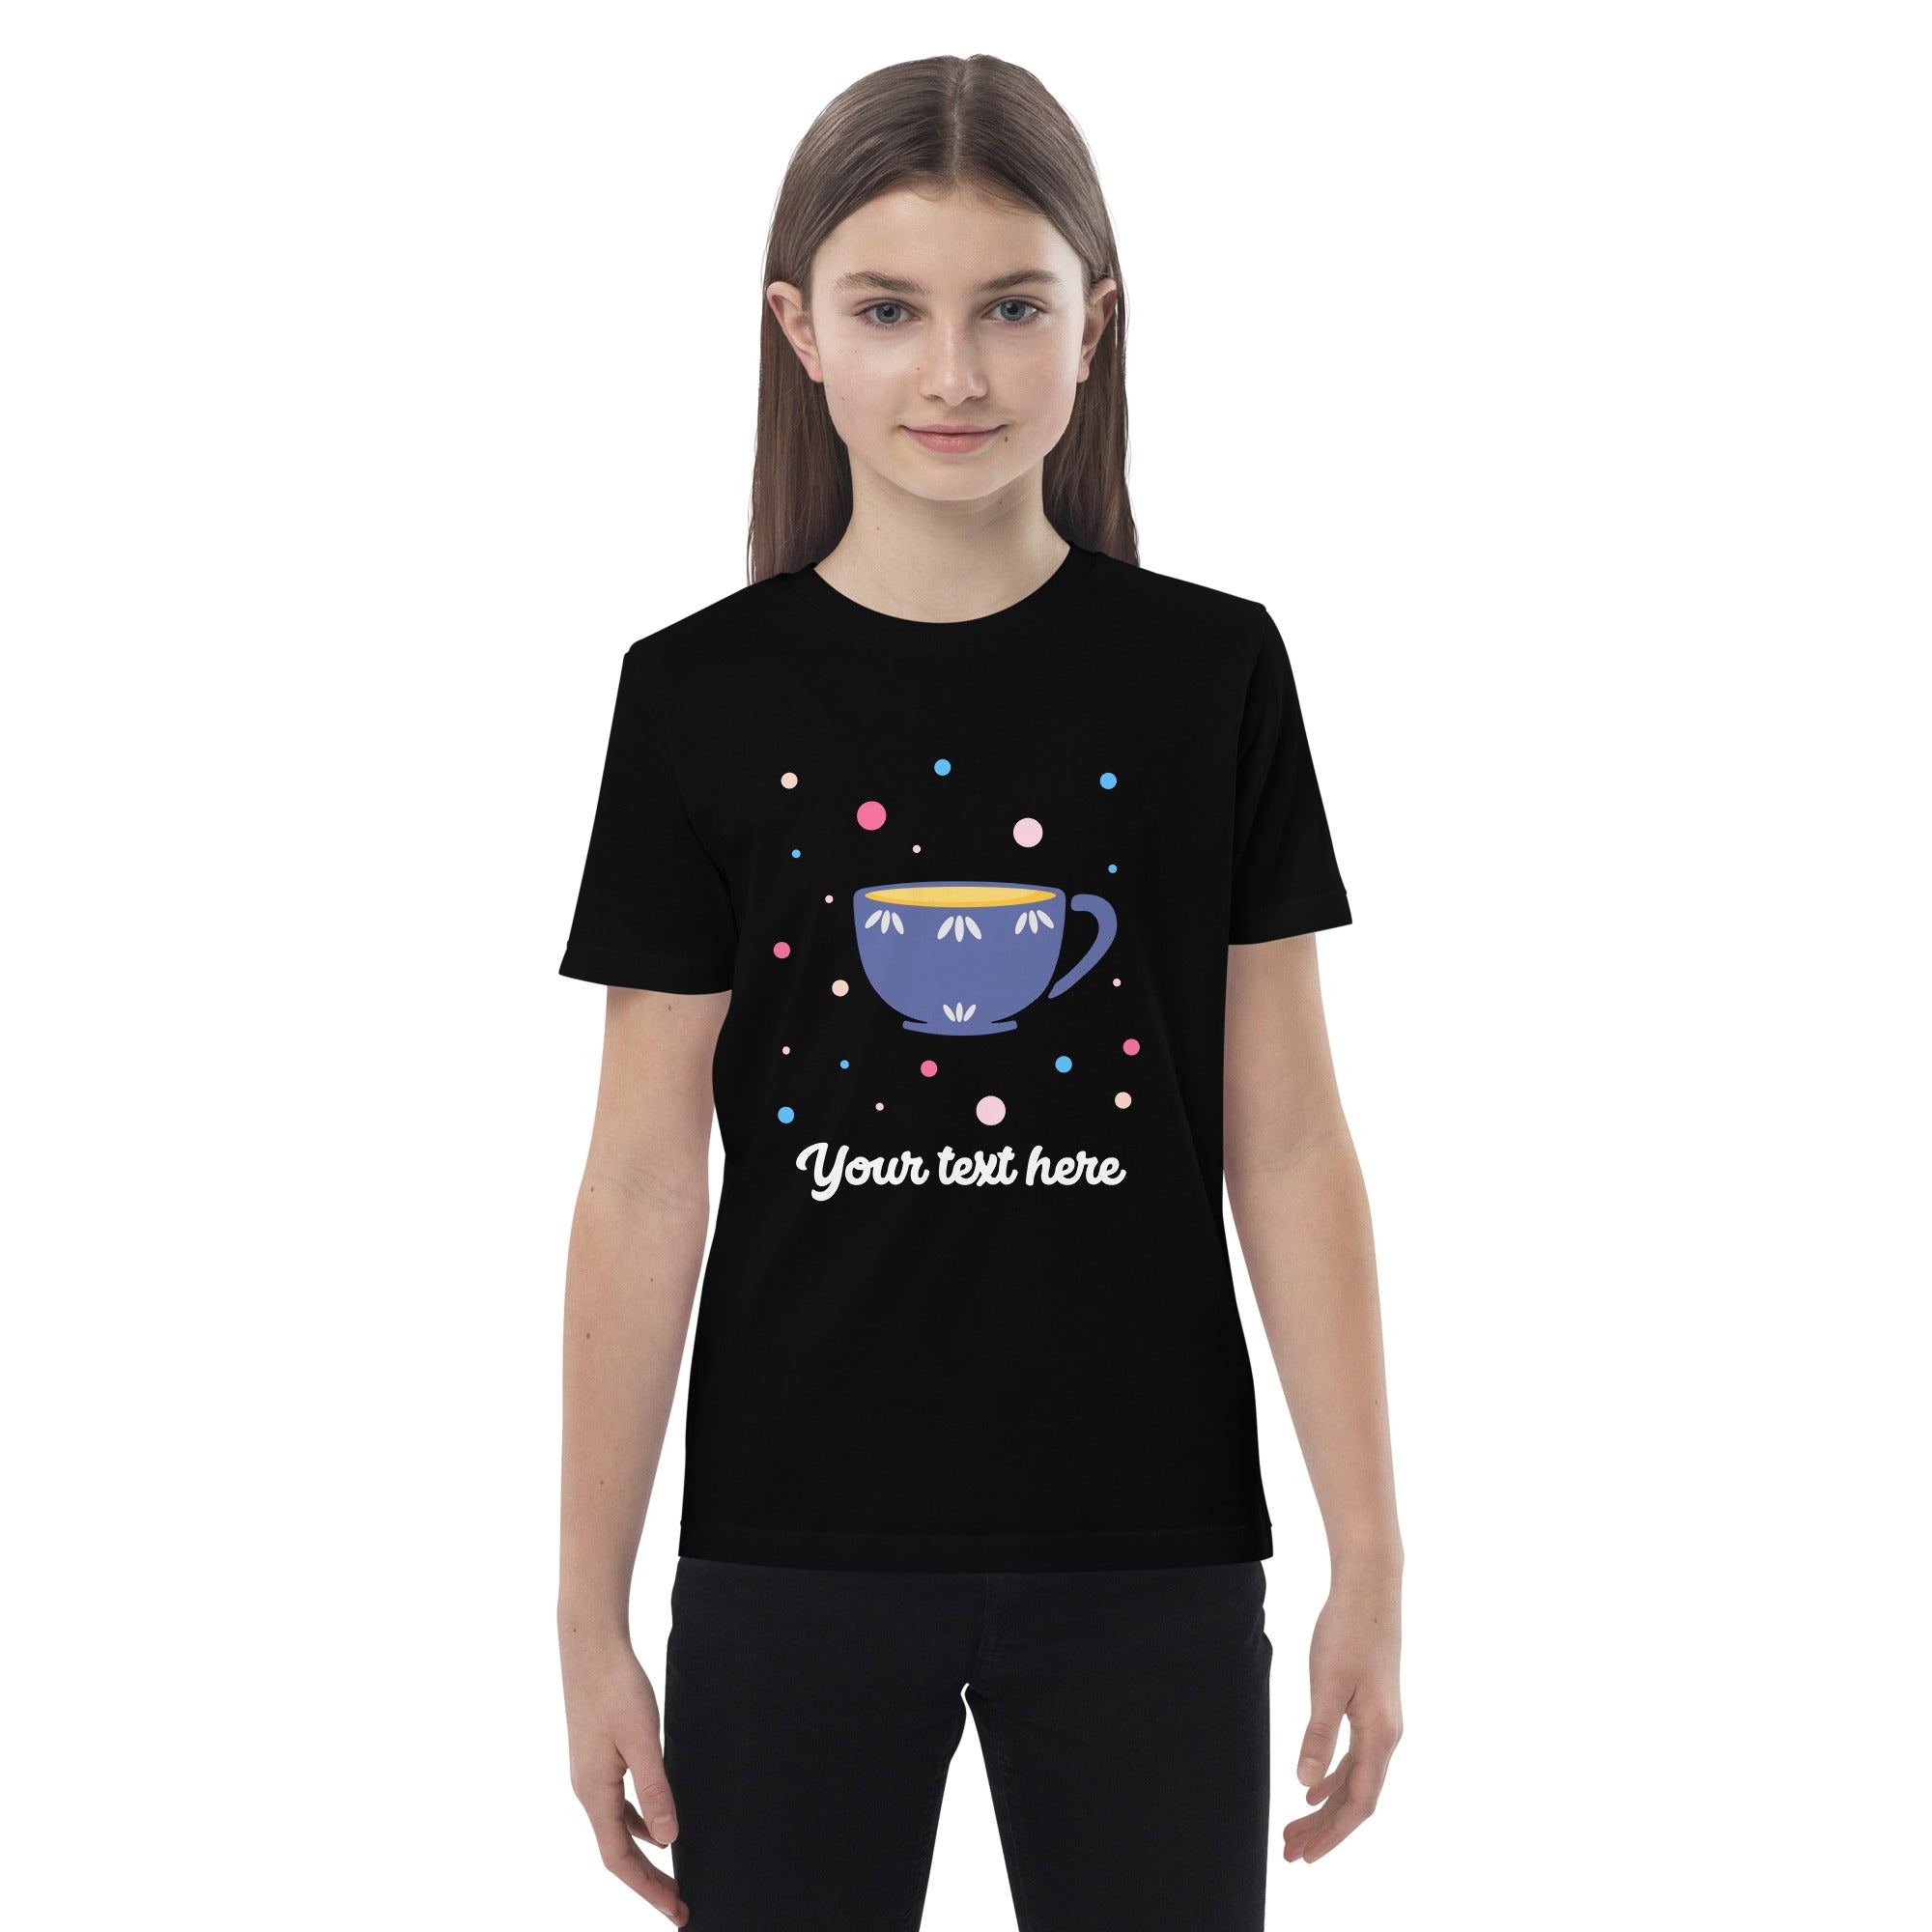 Personalised Custom Text - Organic Cotton Kids T-Shirt - London Doodles - Cup Of Tea - Black 3